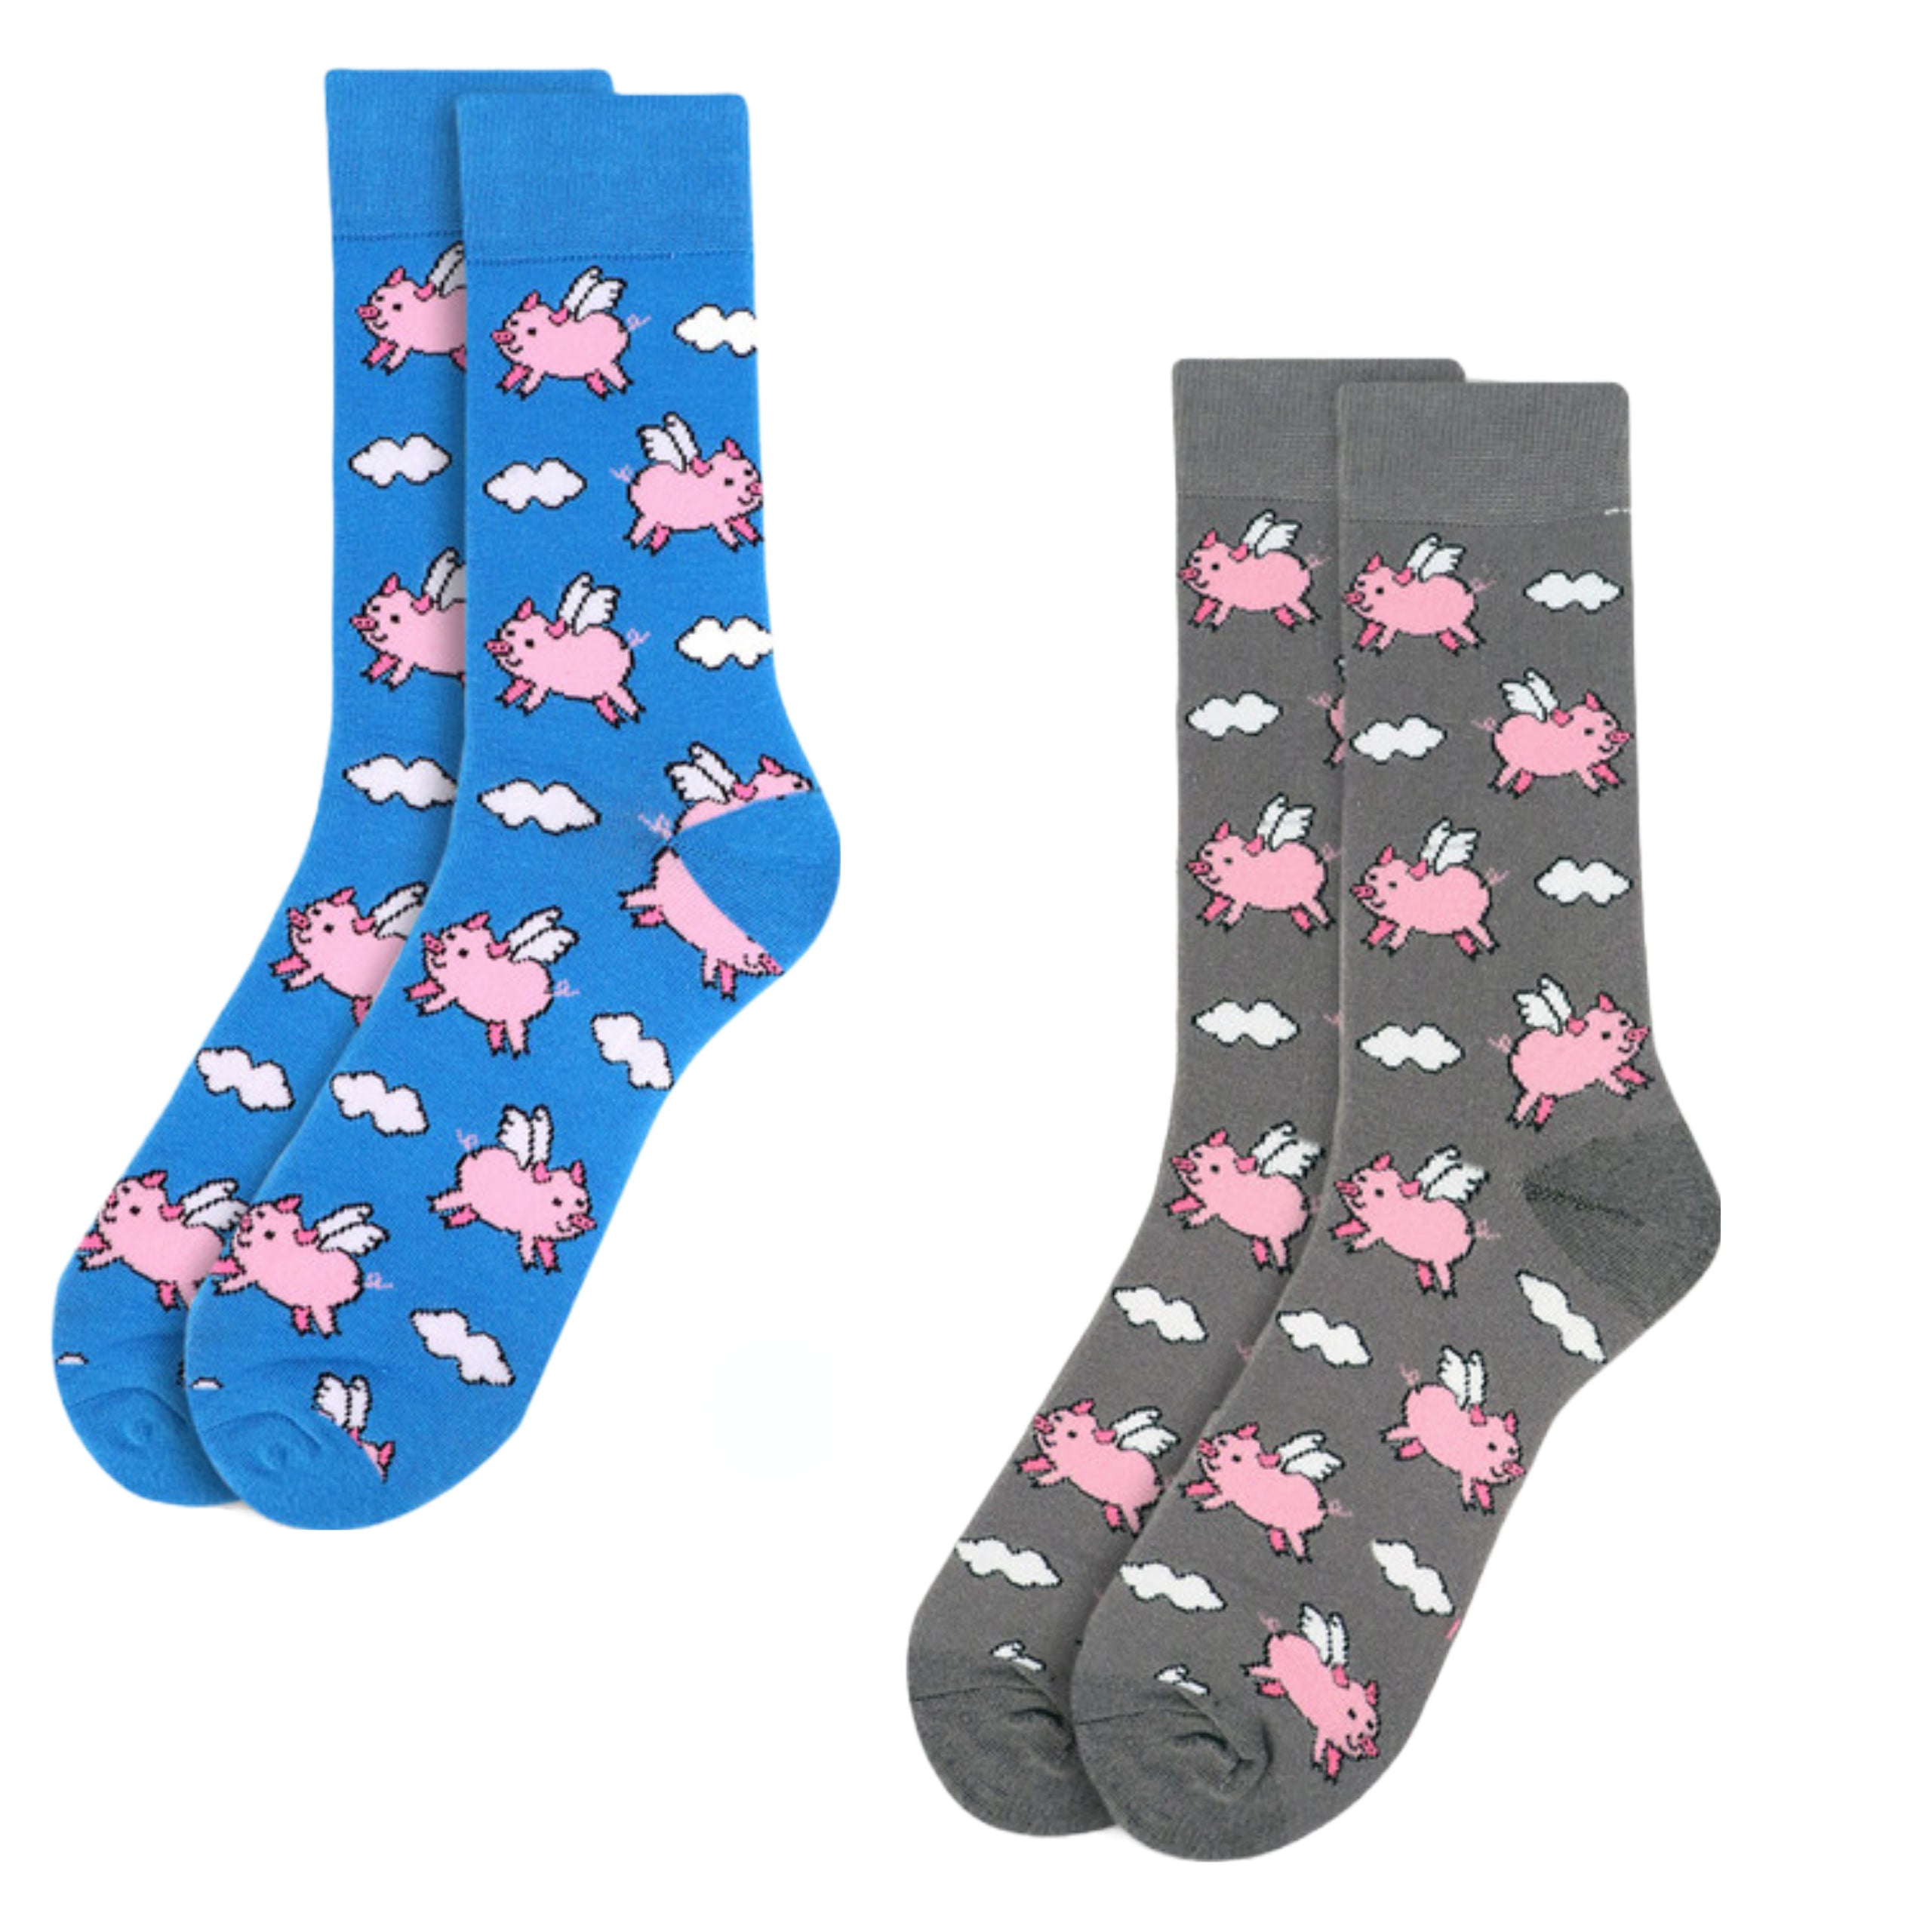 Flying Pigs Socks (Adult Large)